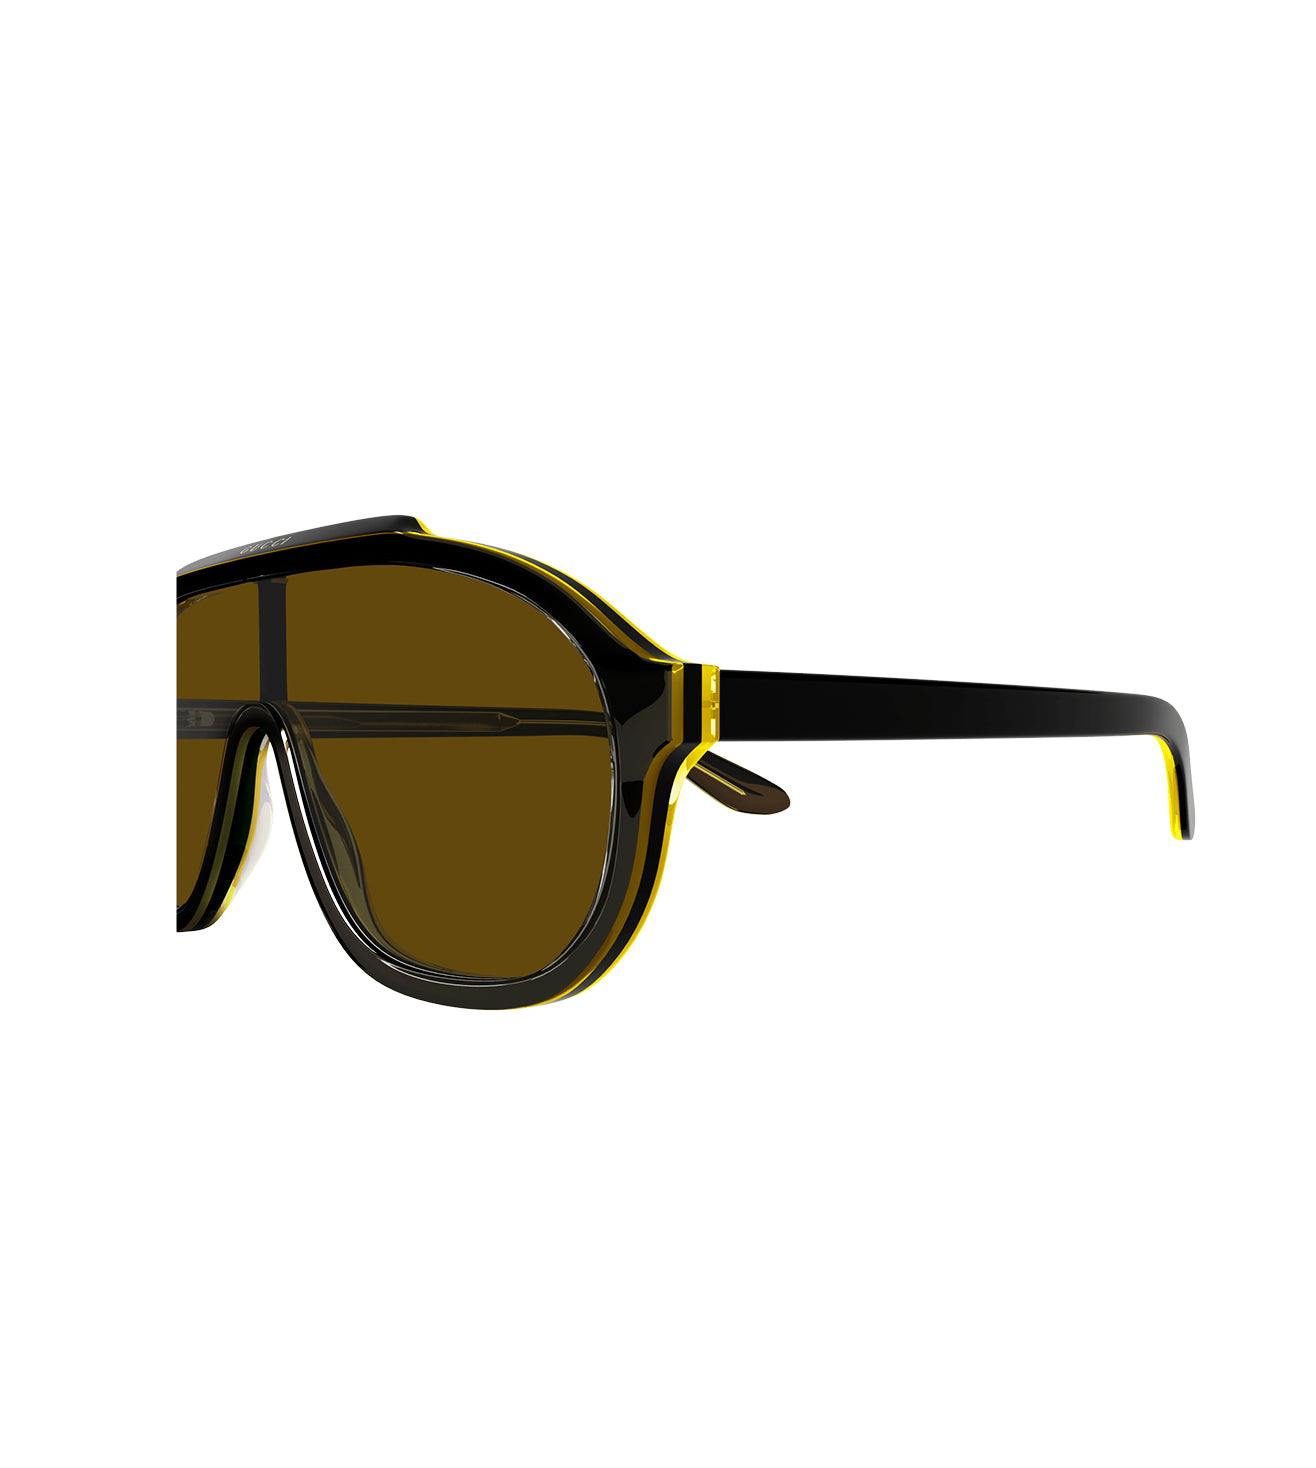 Gucci Men's Yellow Aviator Sunglasses